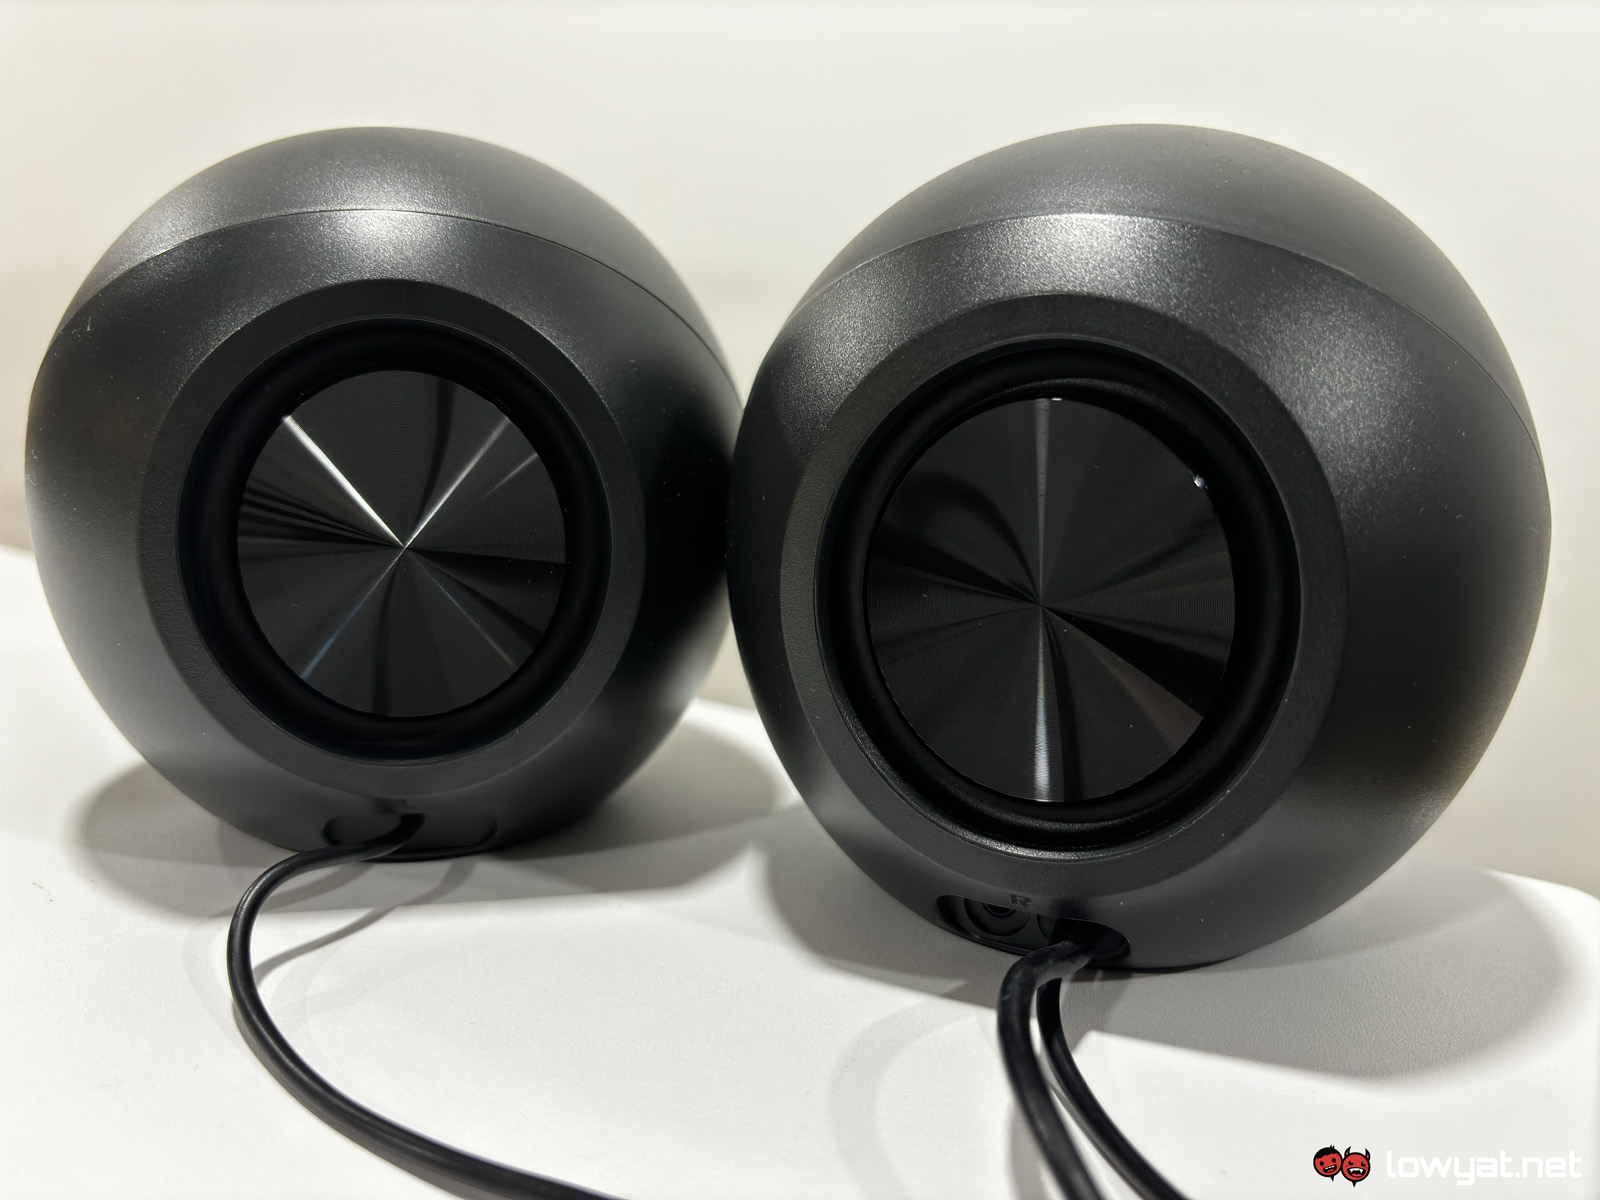 Creative Pebble 2.0 USB-Powered Desktop Speakers: Quick Review, by Kazi